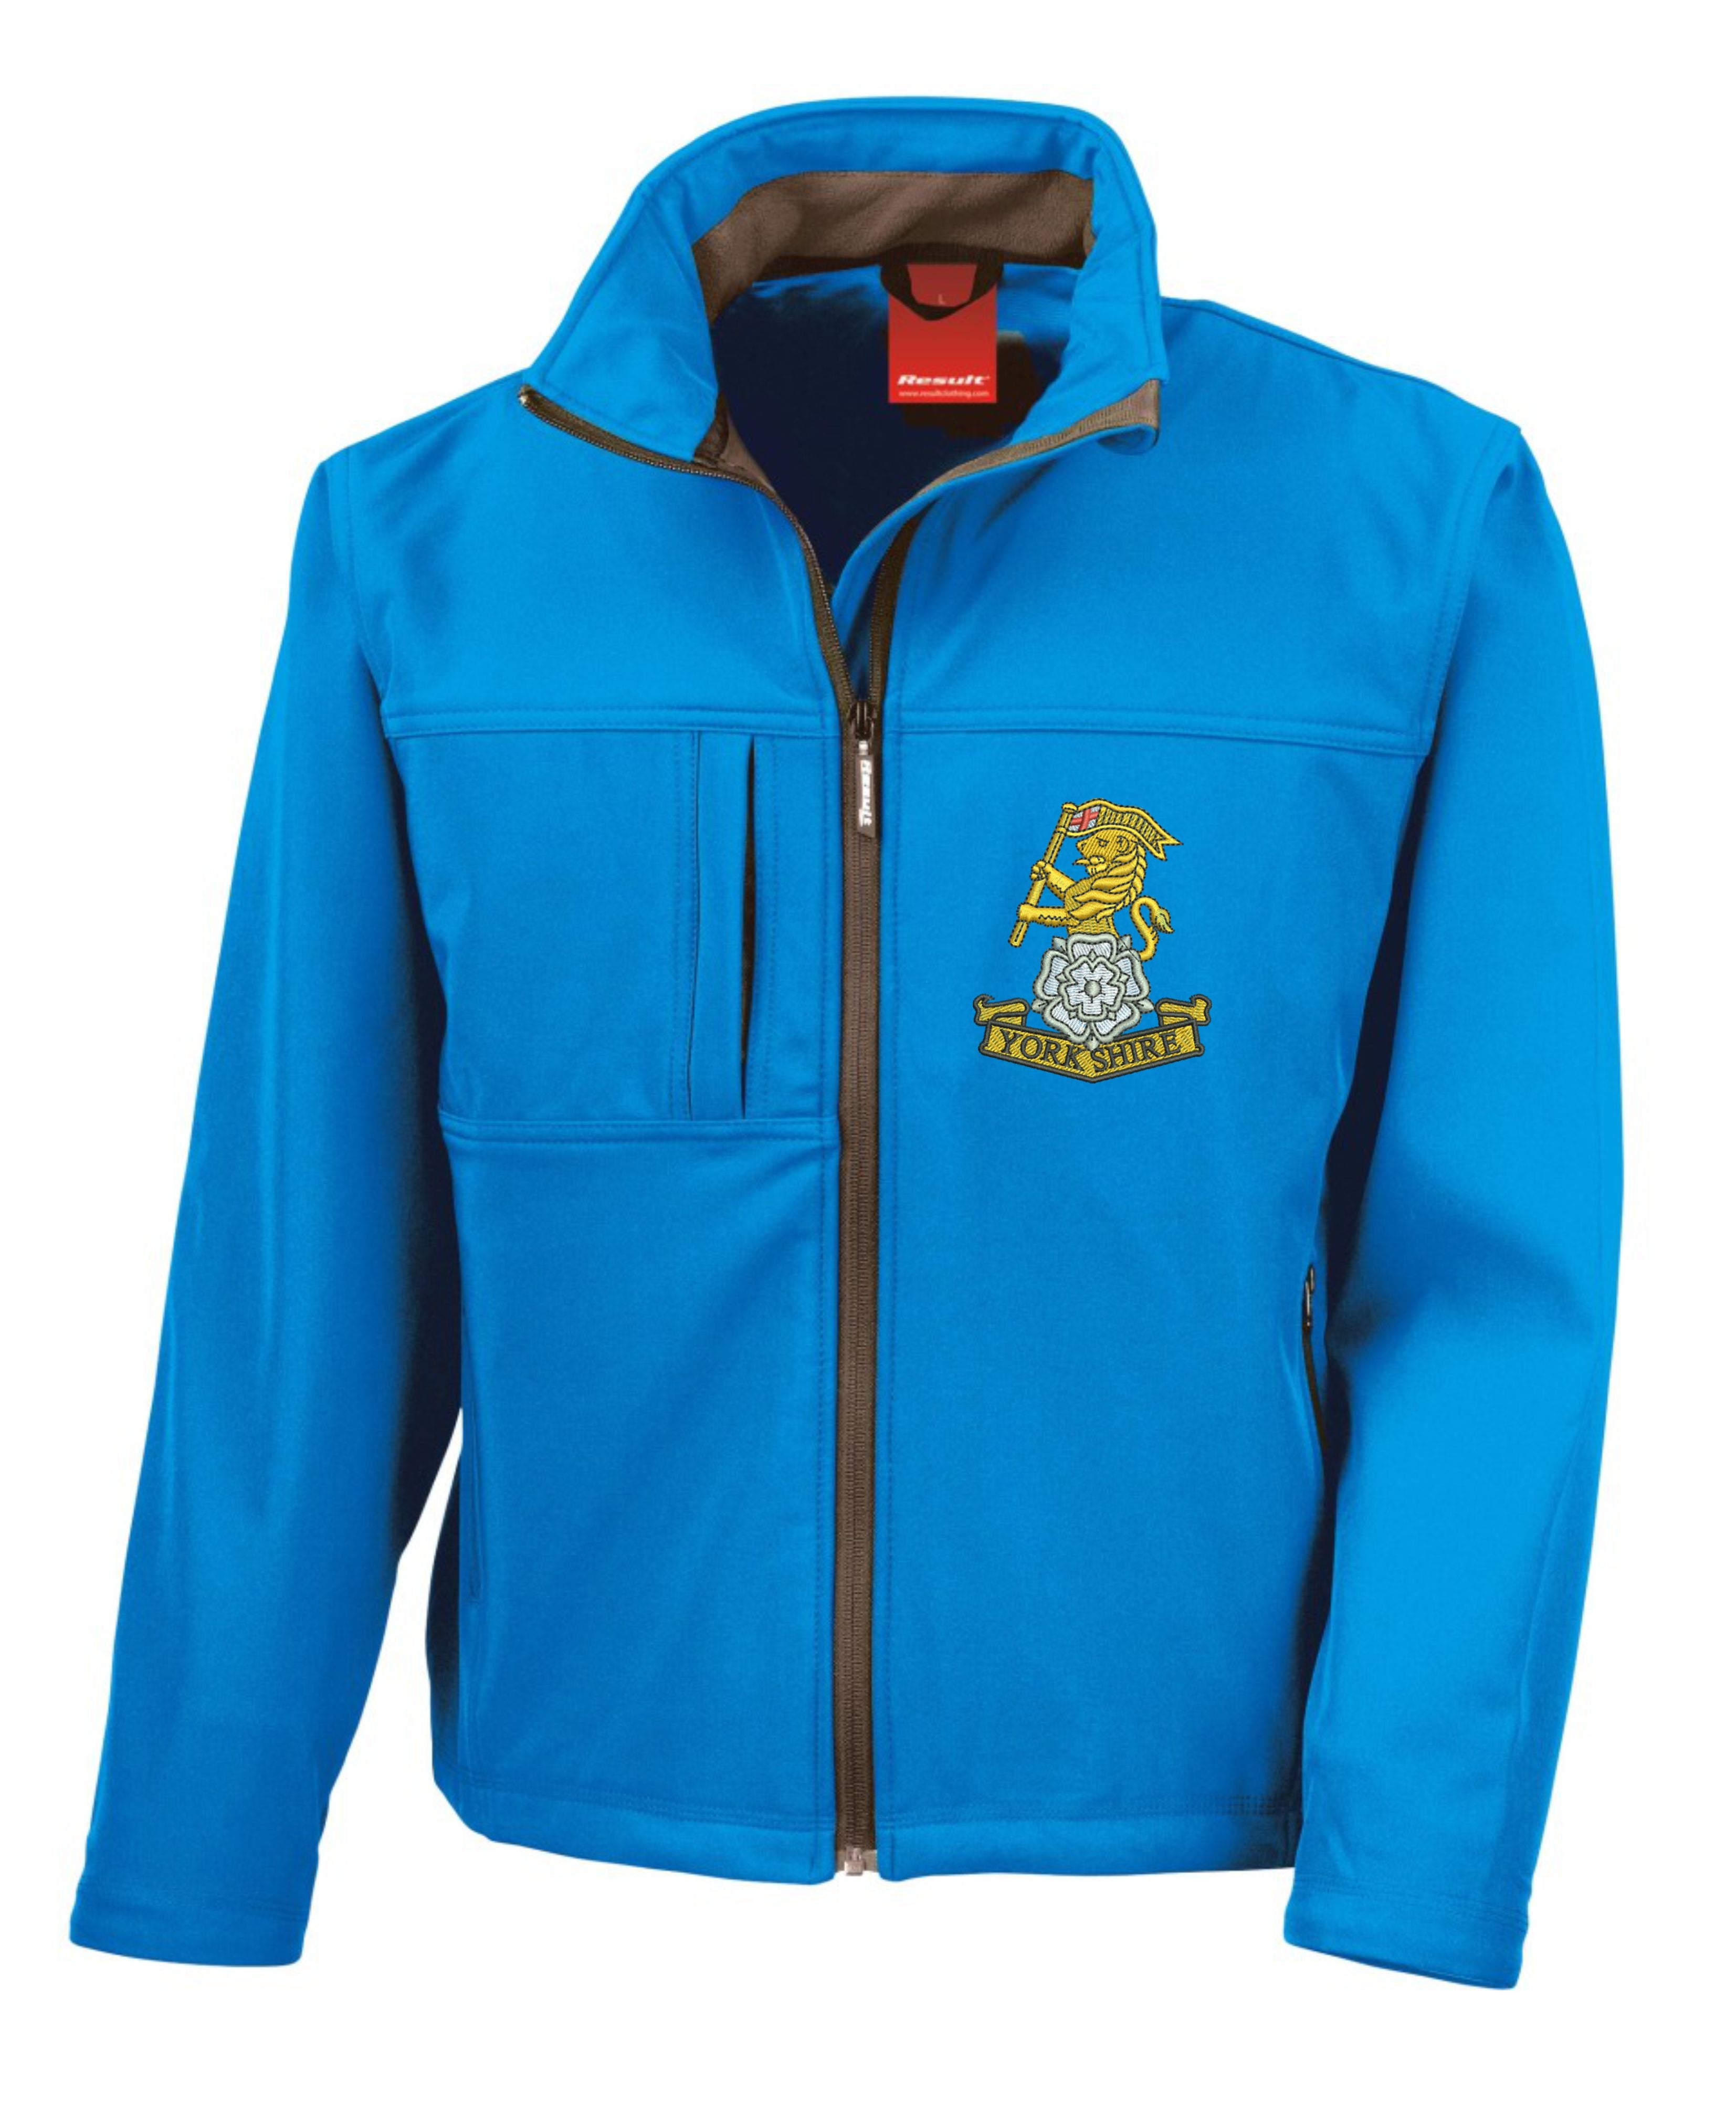 Yorkshire Regiment softshell jackets